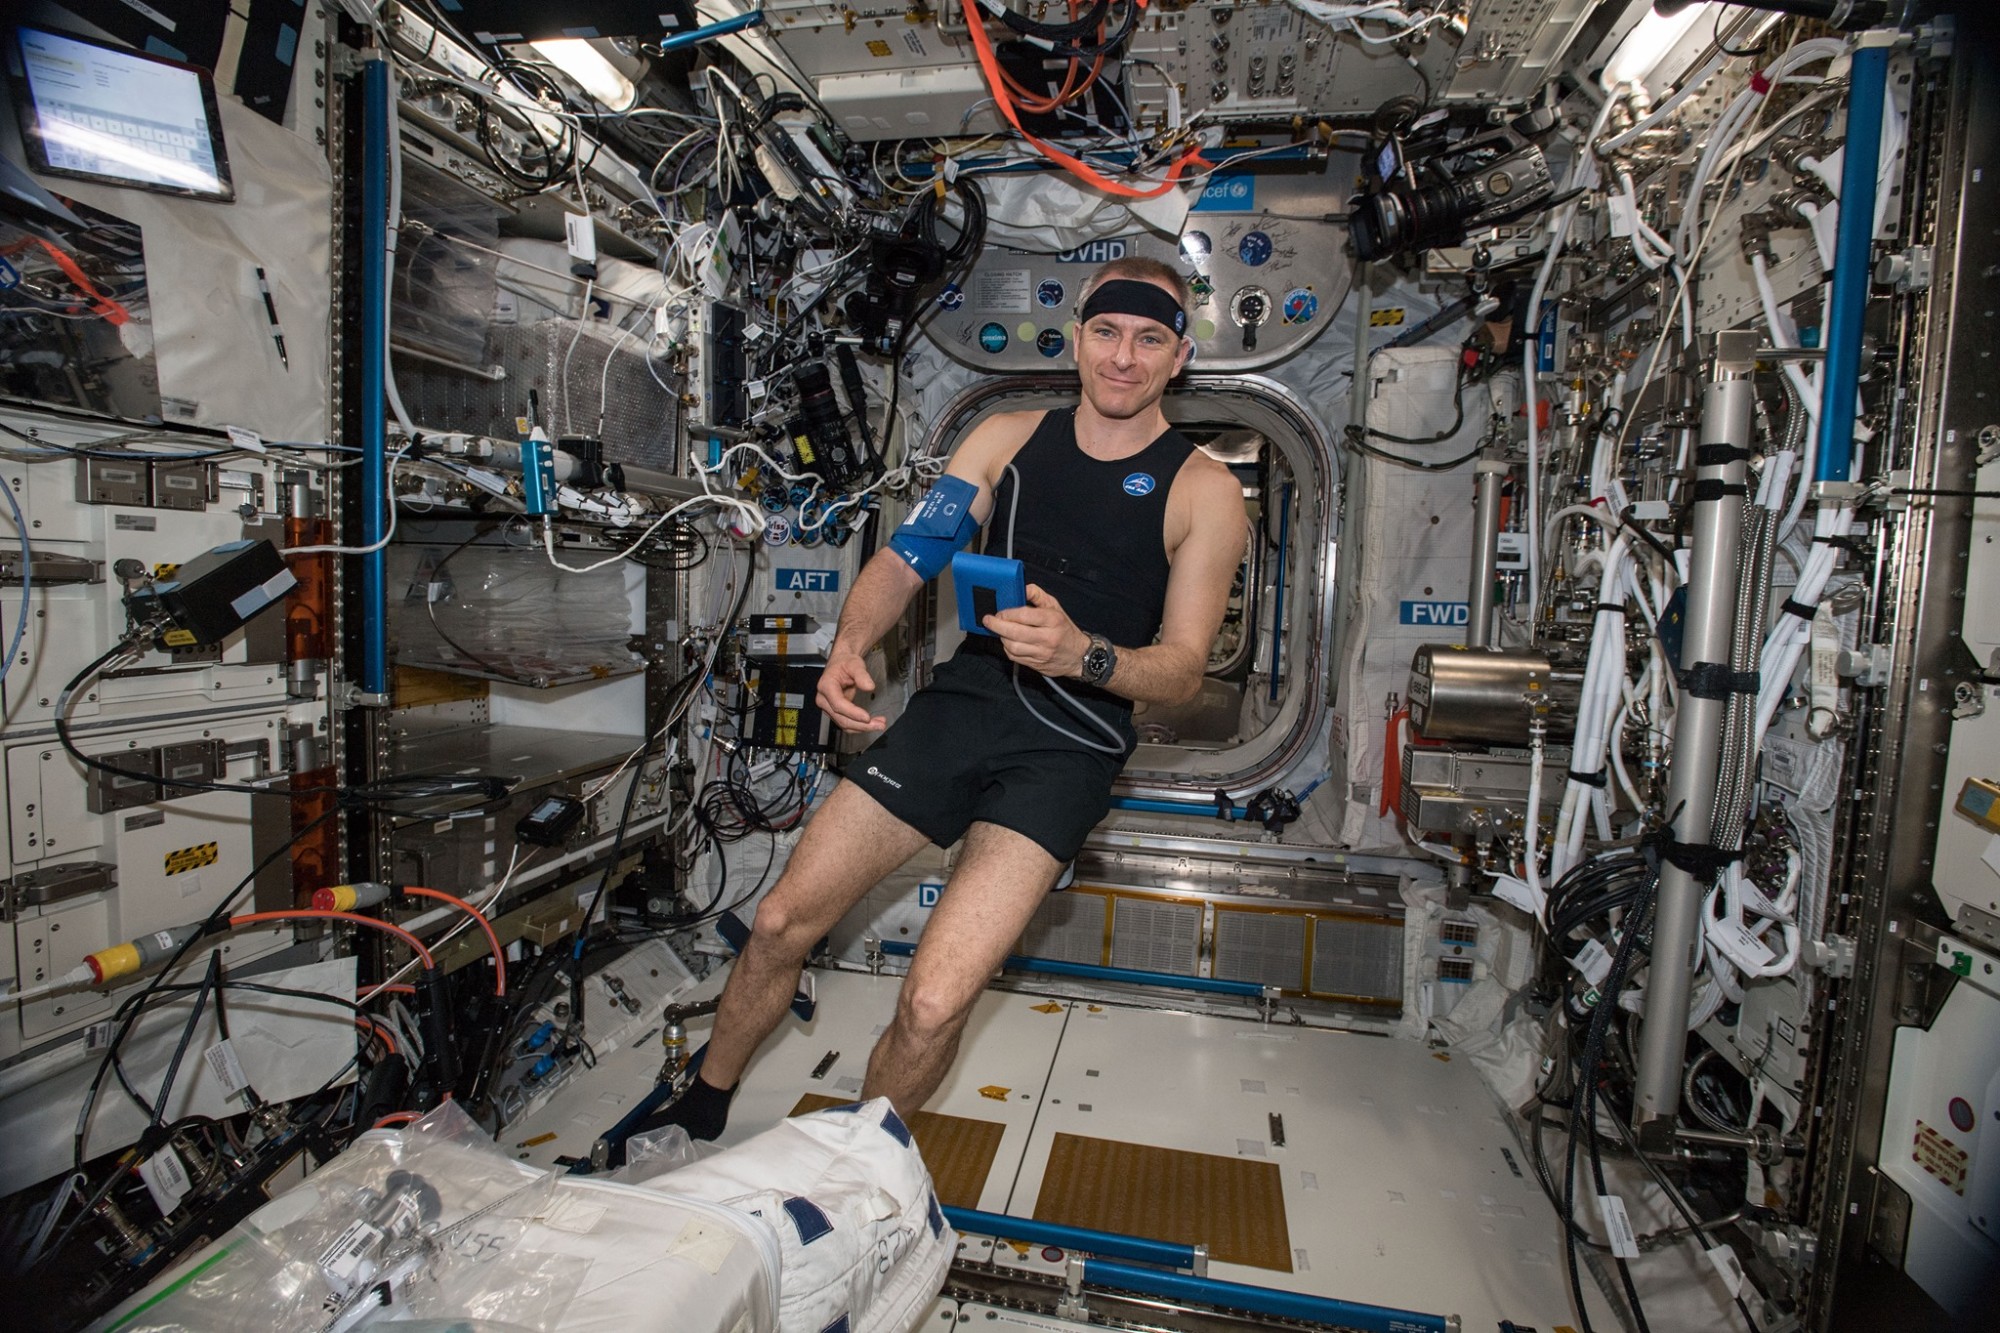 CARDIOBREATH: Diving into Astronaut Health